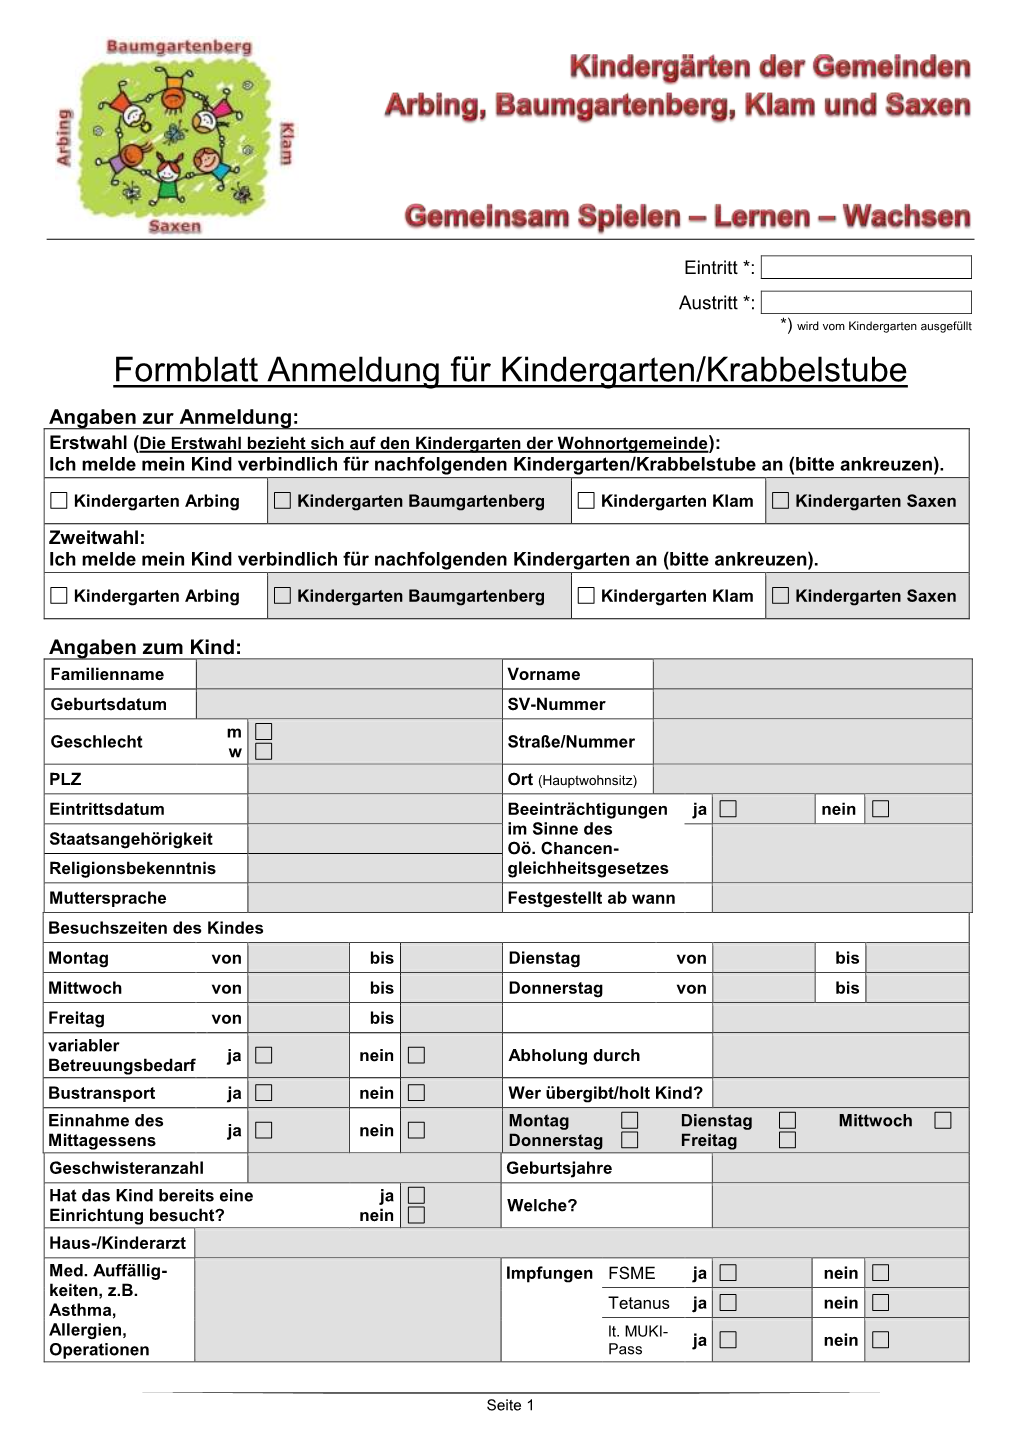 Formblatt Anmeldung Für Kindergarten/Krabbelstube